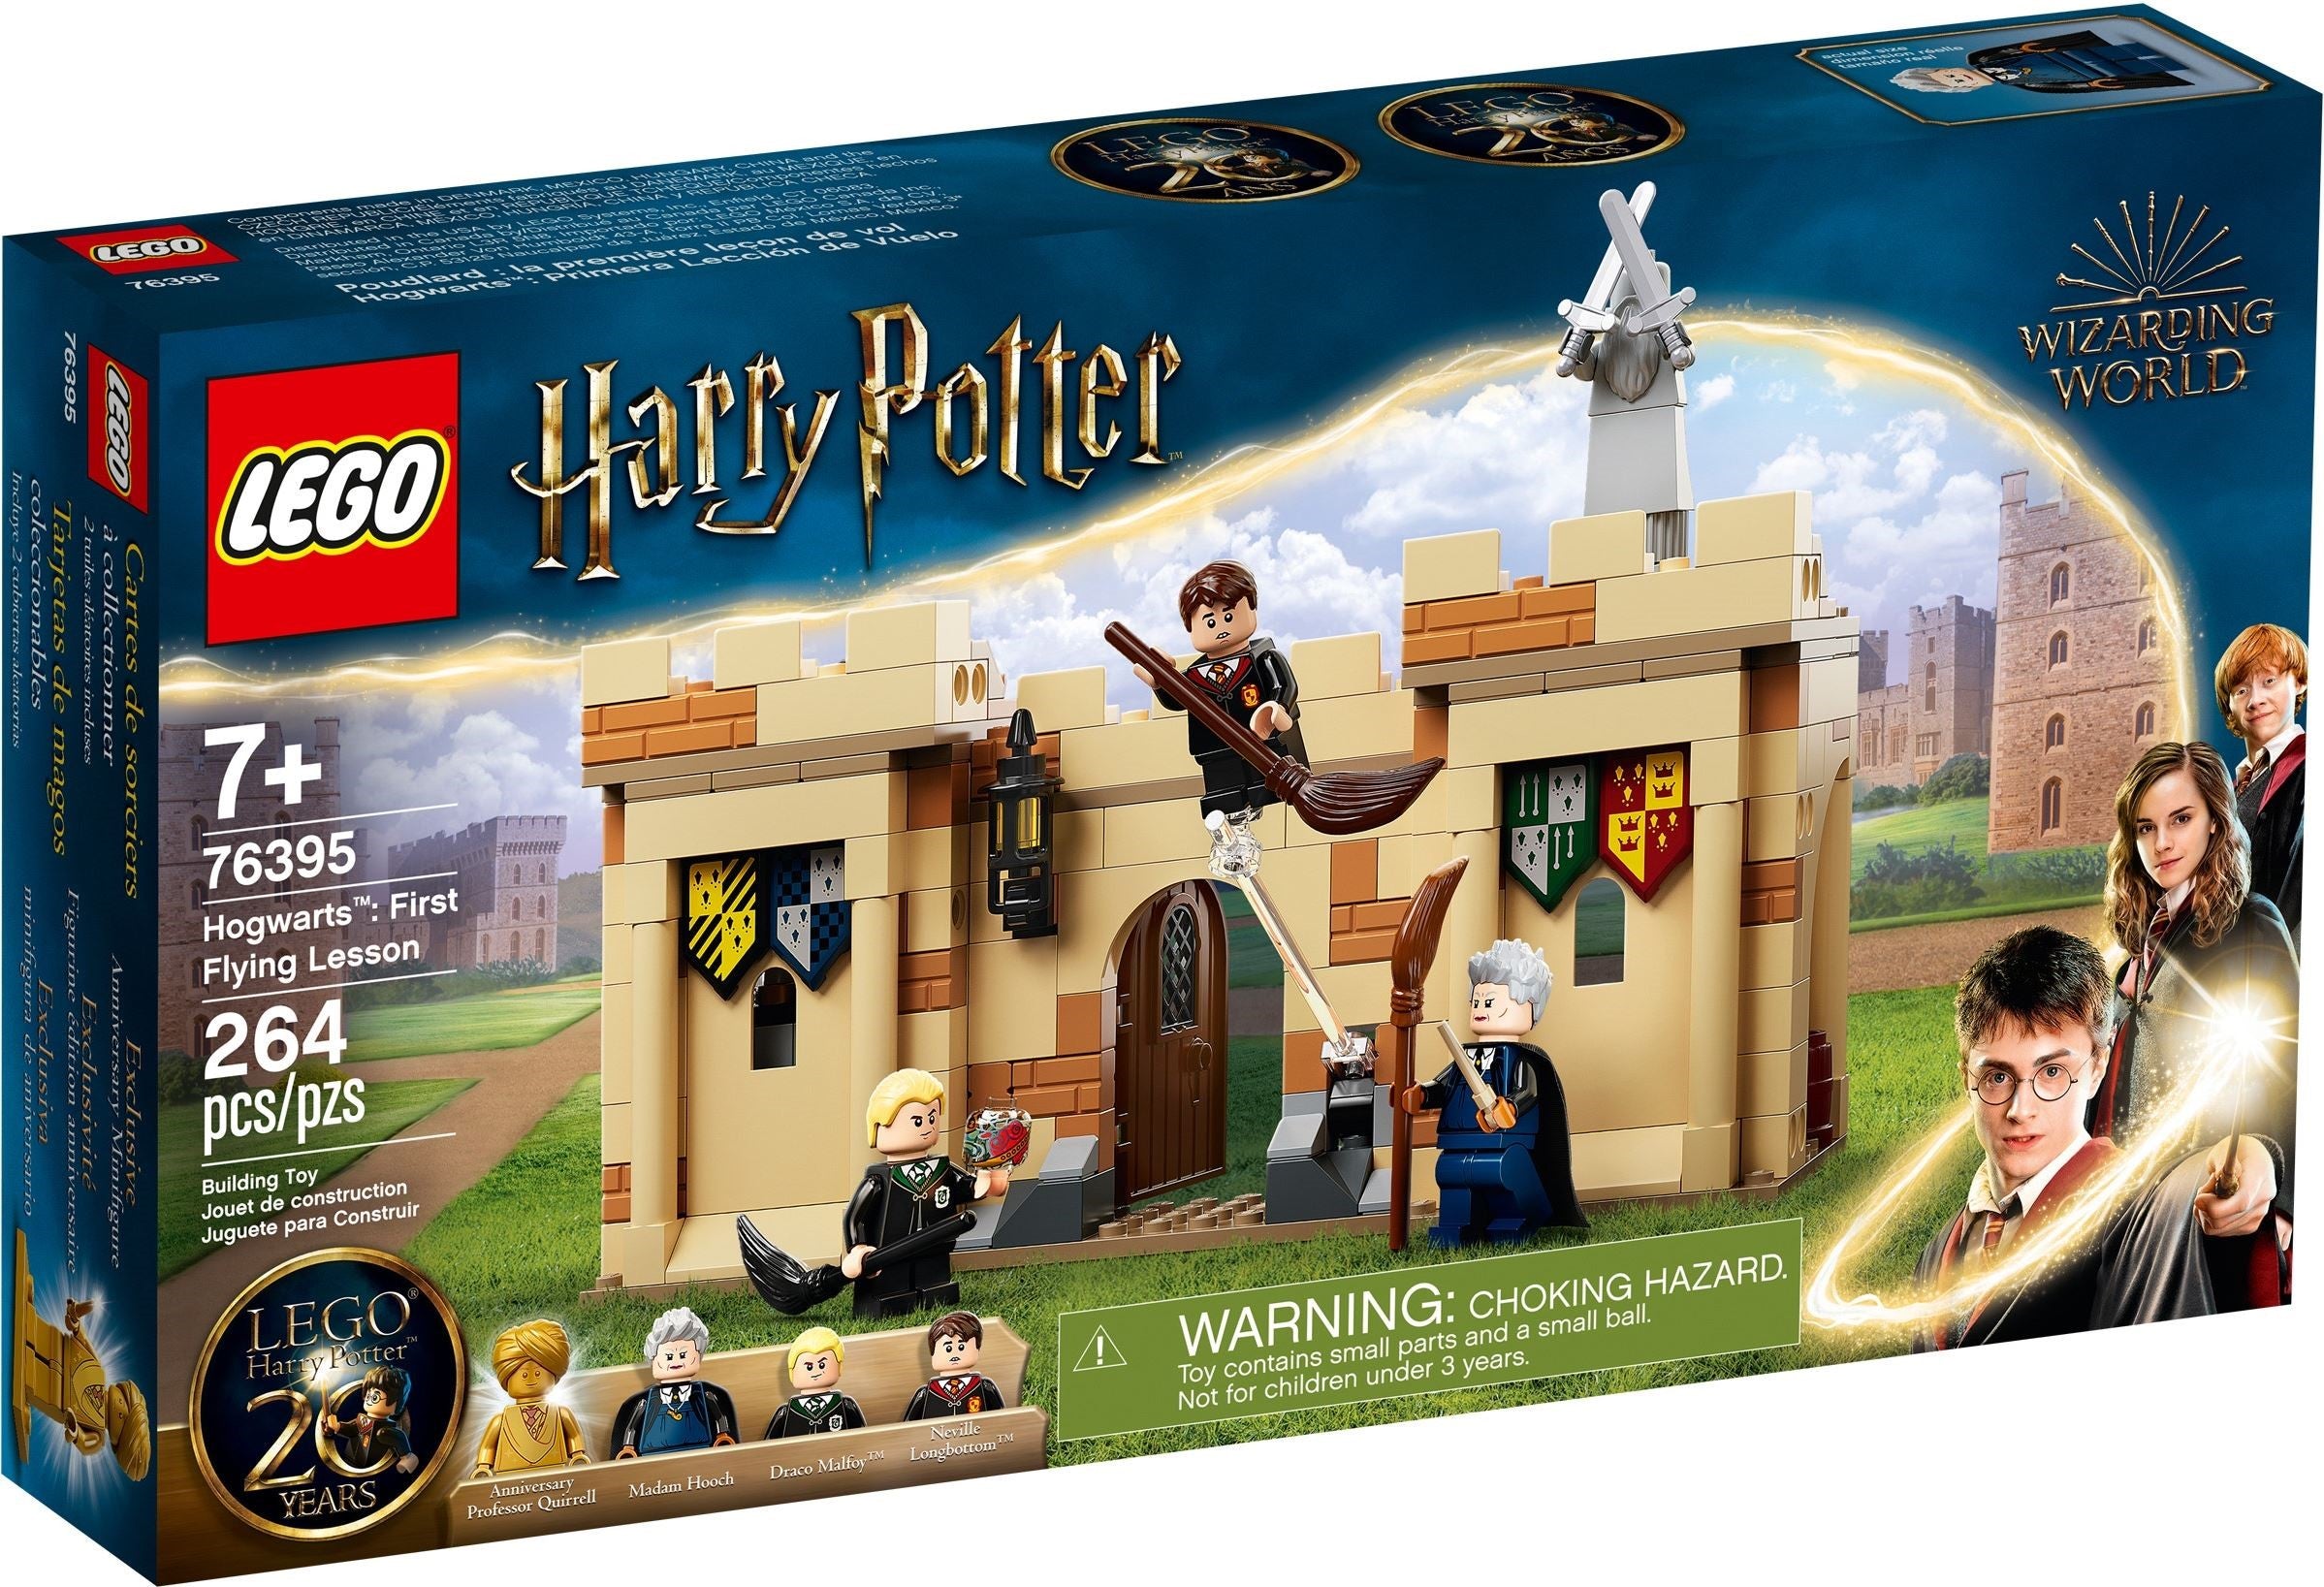 Lego Harry Potter 76395 - Hogwarts: First Flying Lesson